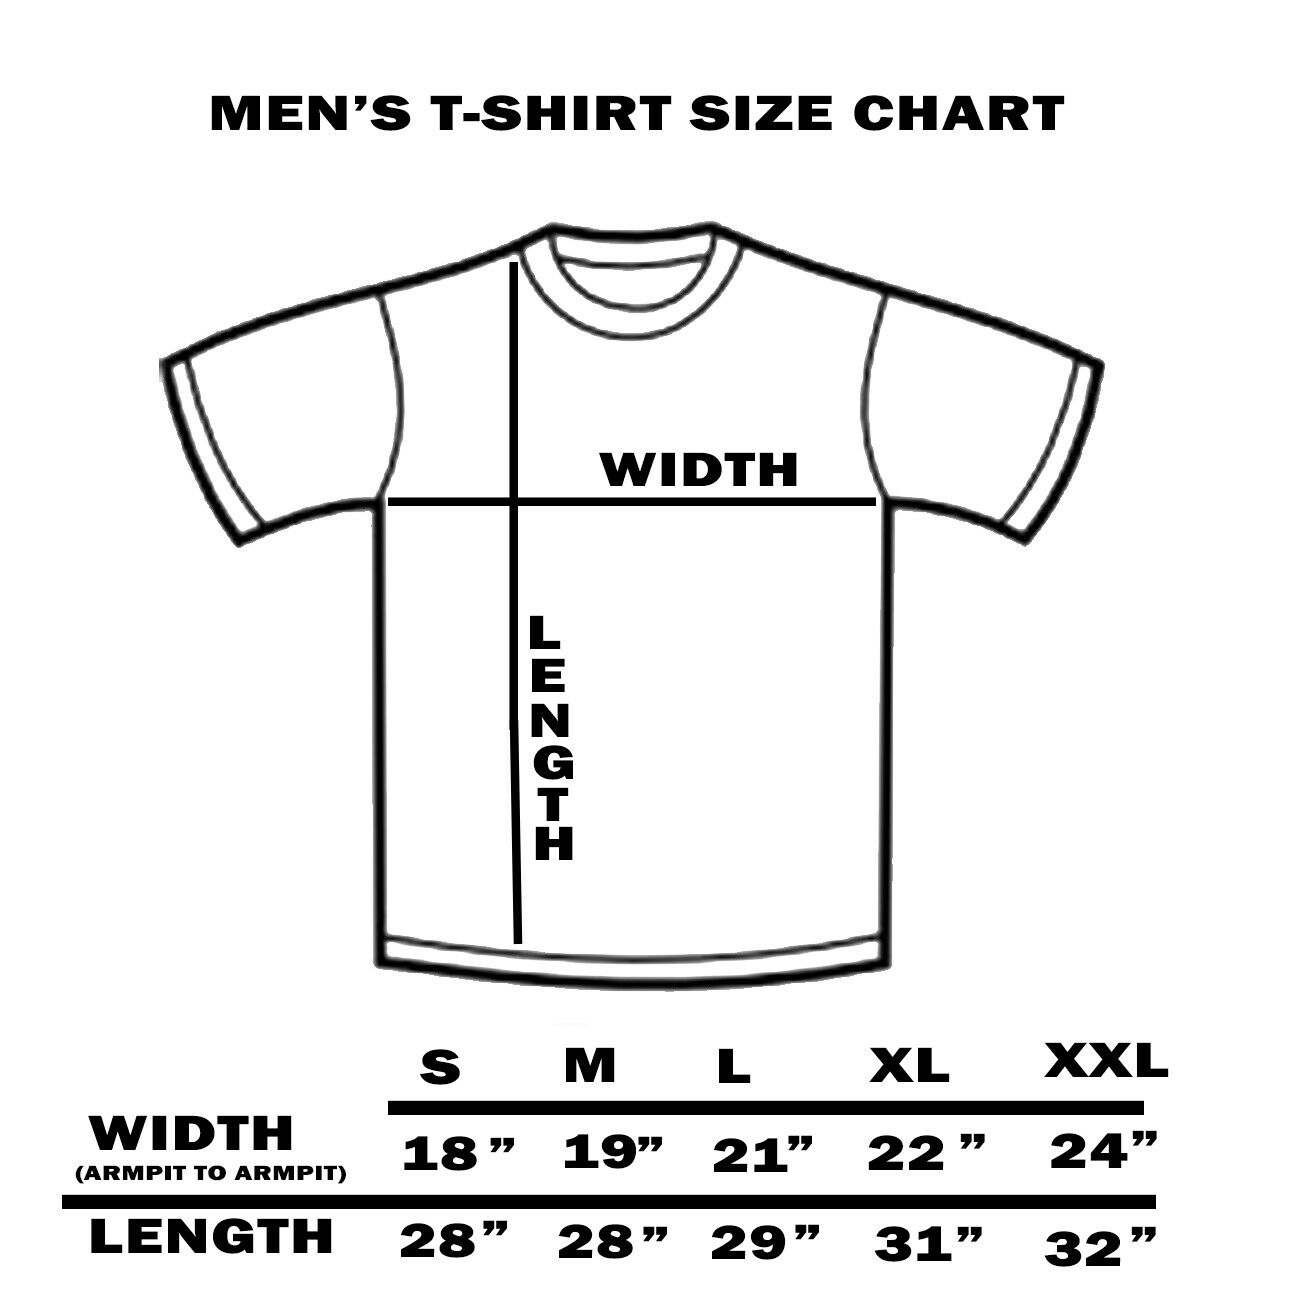 BILLABONG Men's t-shirt Core Fit Graphic Tee 100% Cotton Reg $ 26 Olive NEW